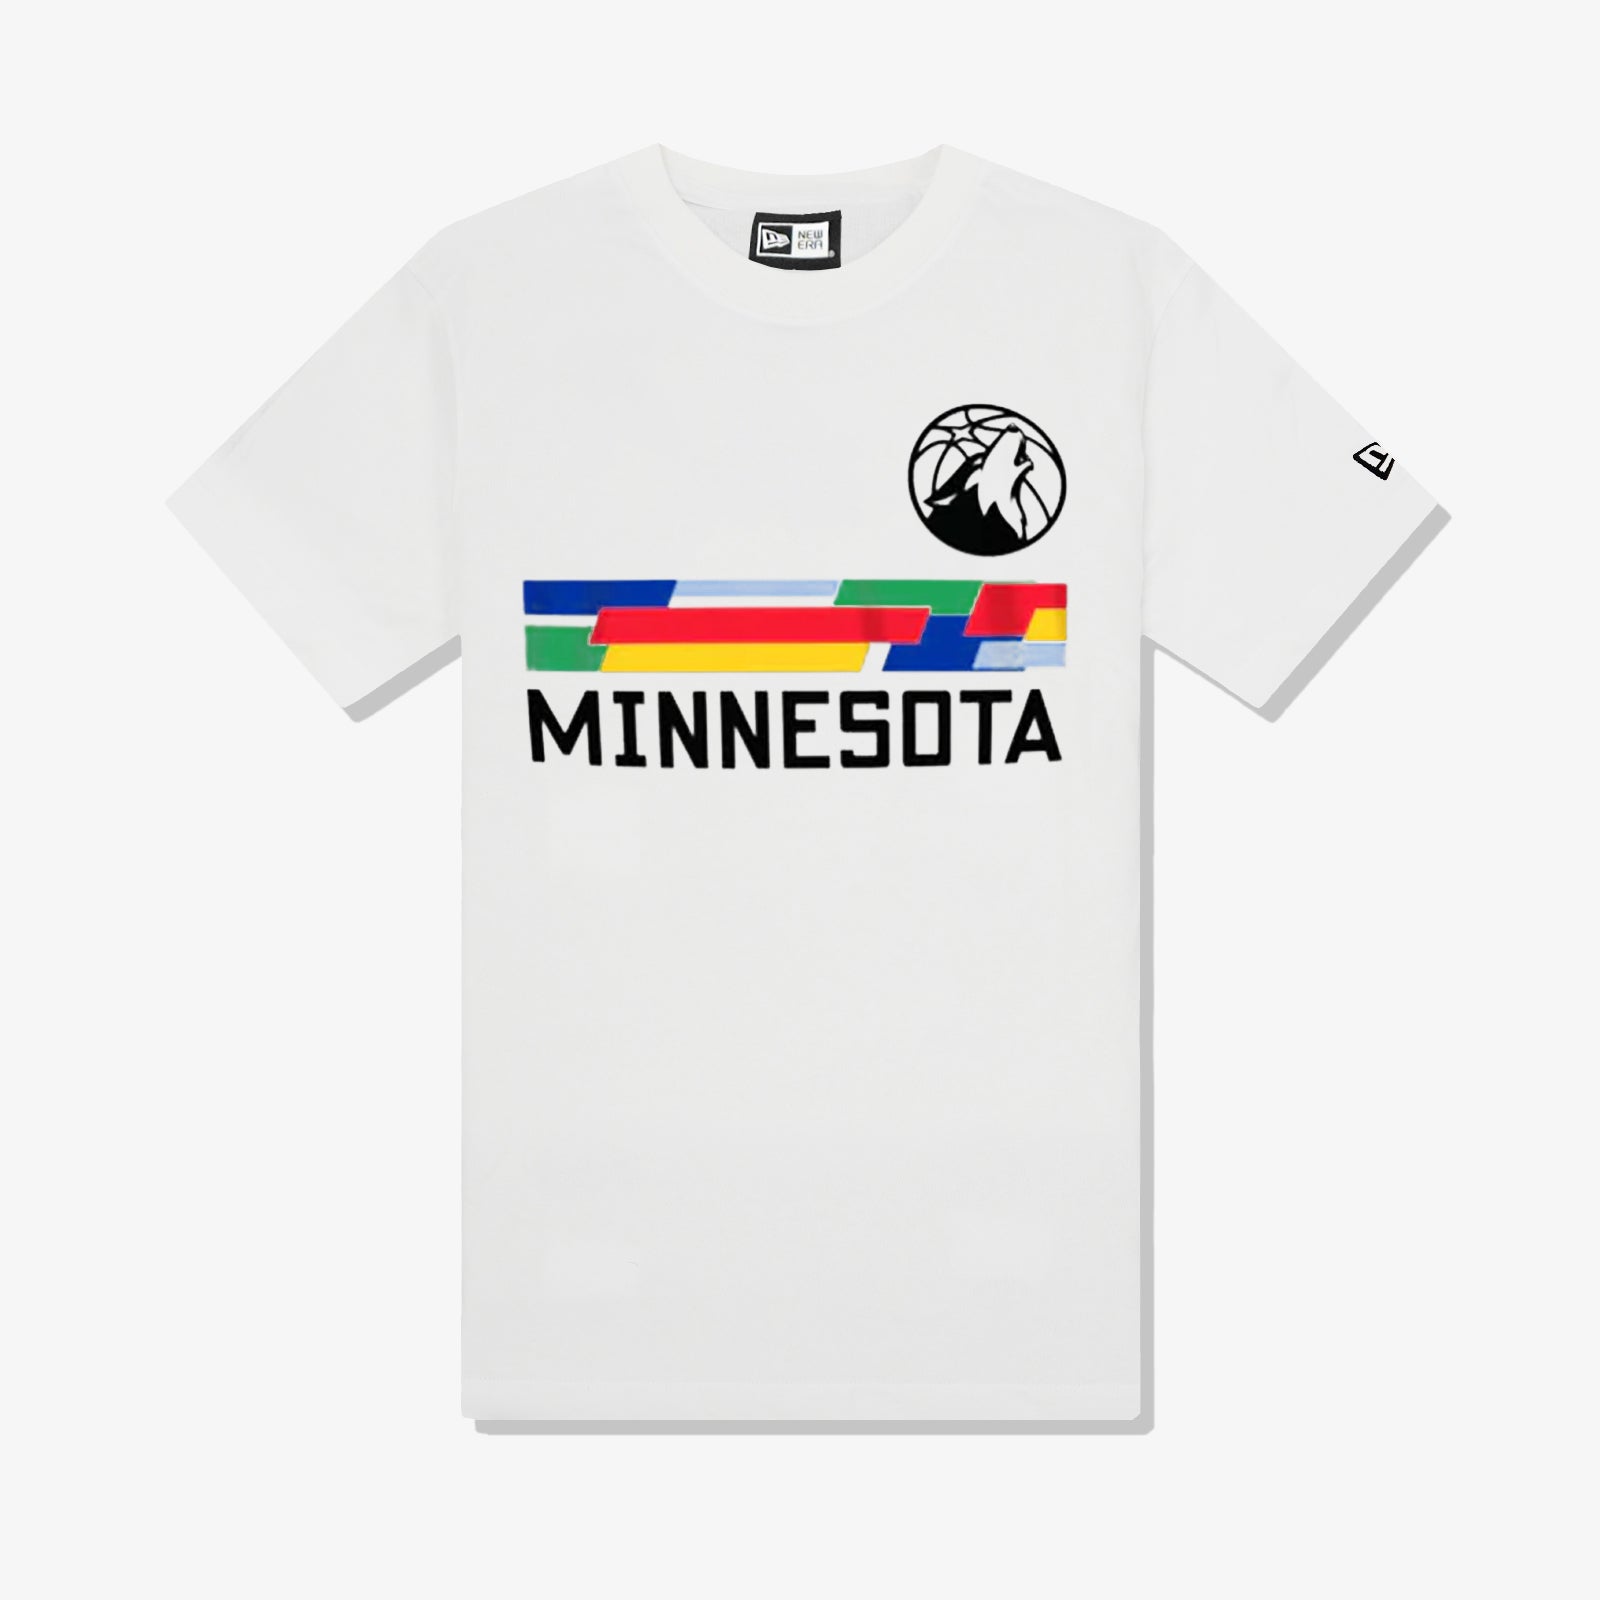 Minnesota Timberwolves City Edition Men's Nike NBA Logo T-Shirt